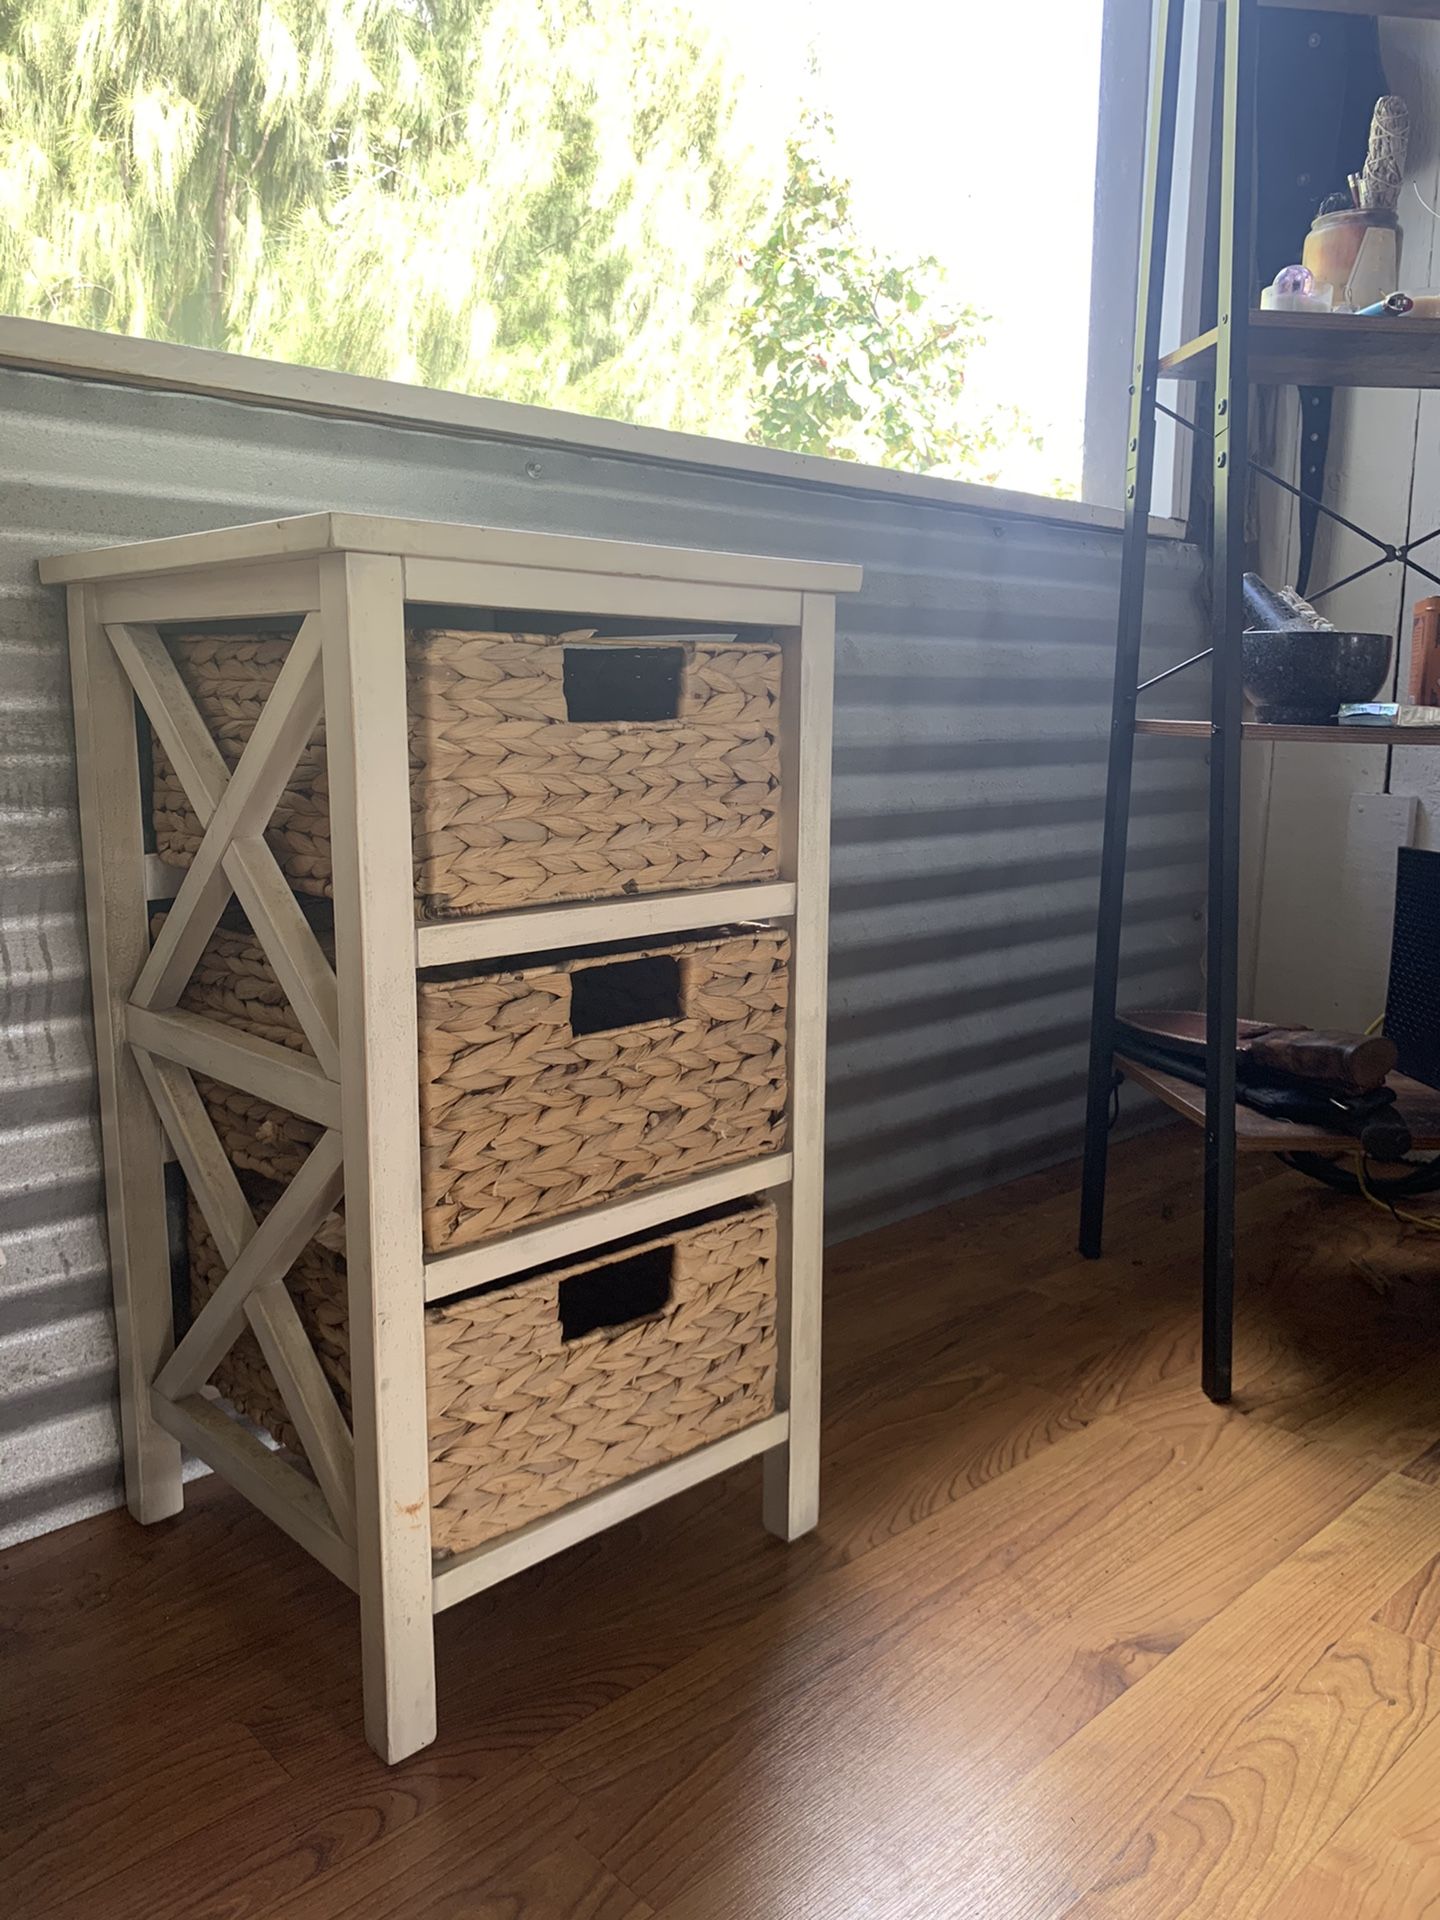 Free wood/wicker storage cabinet